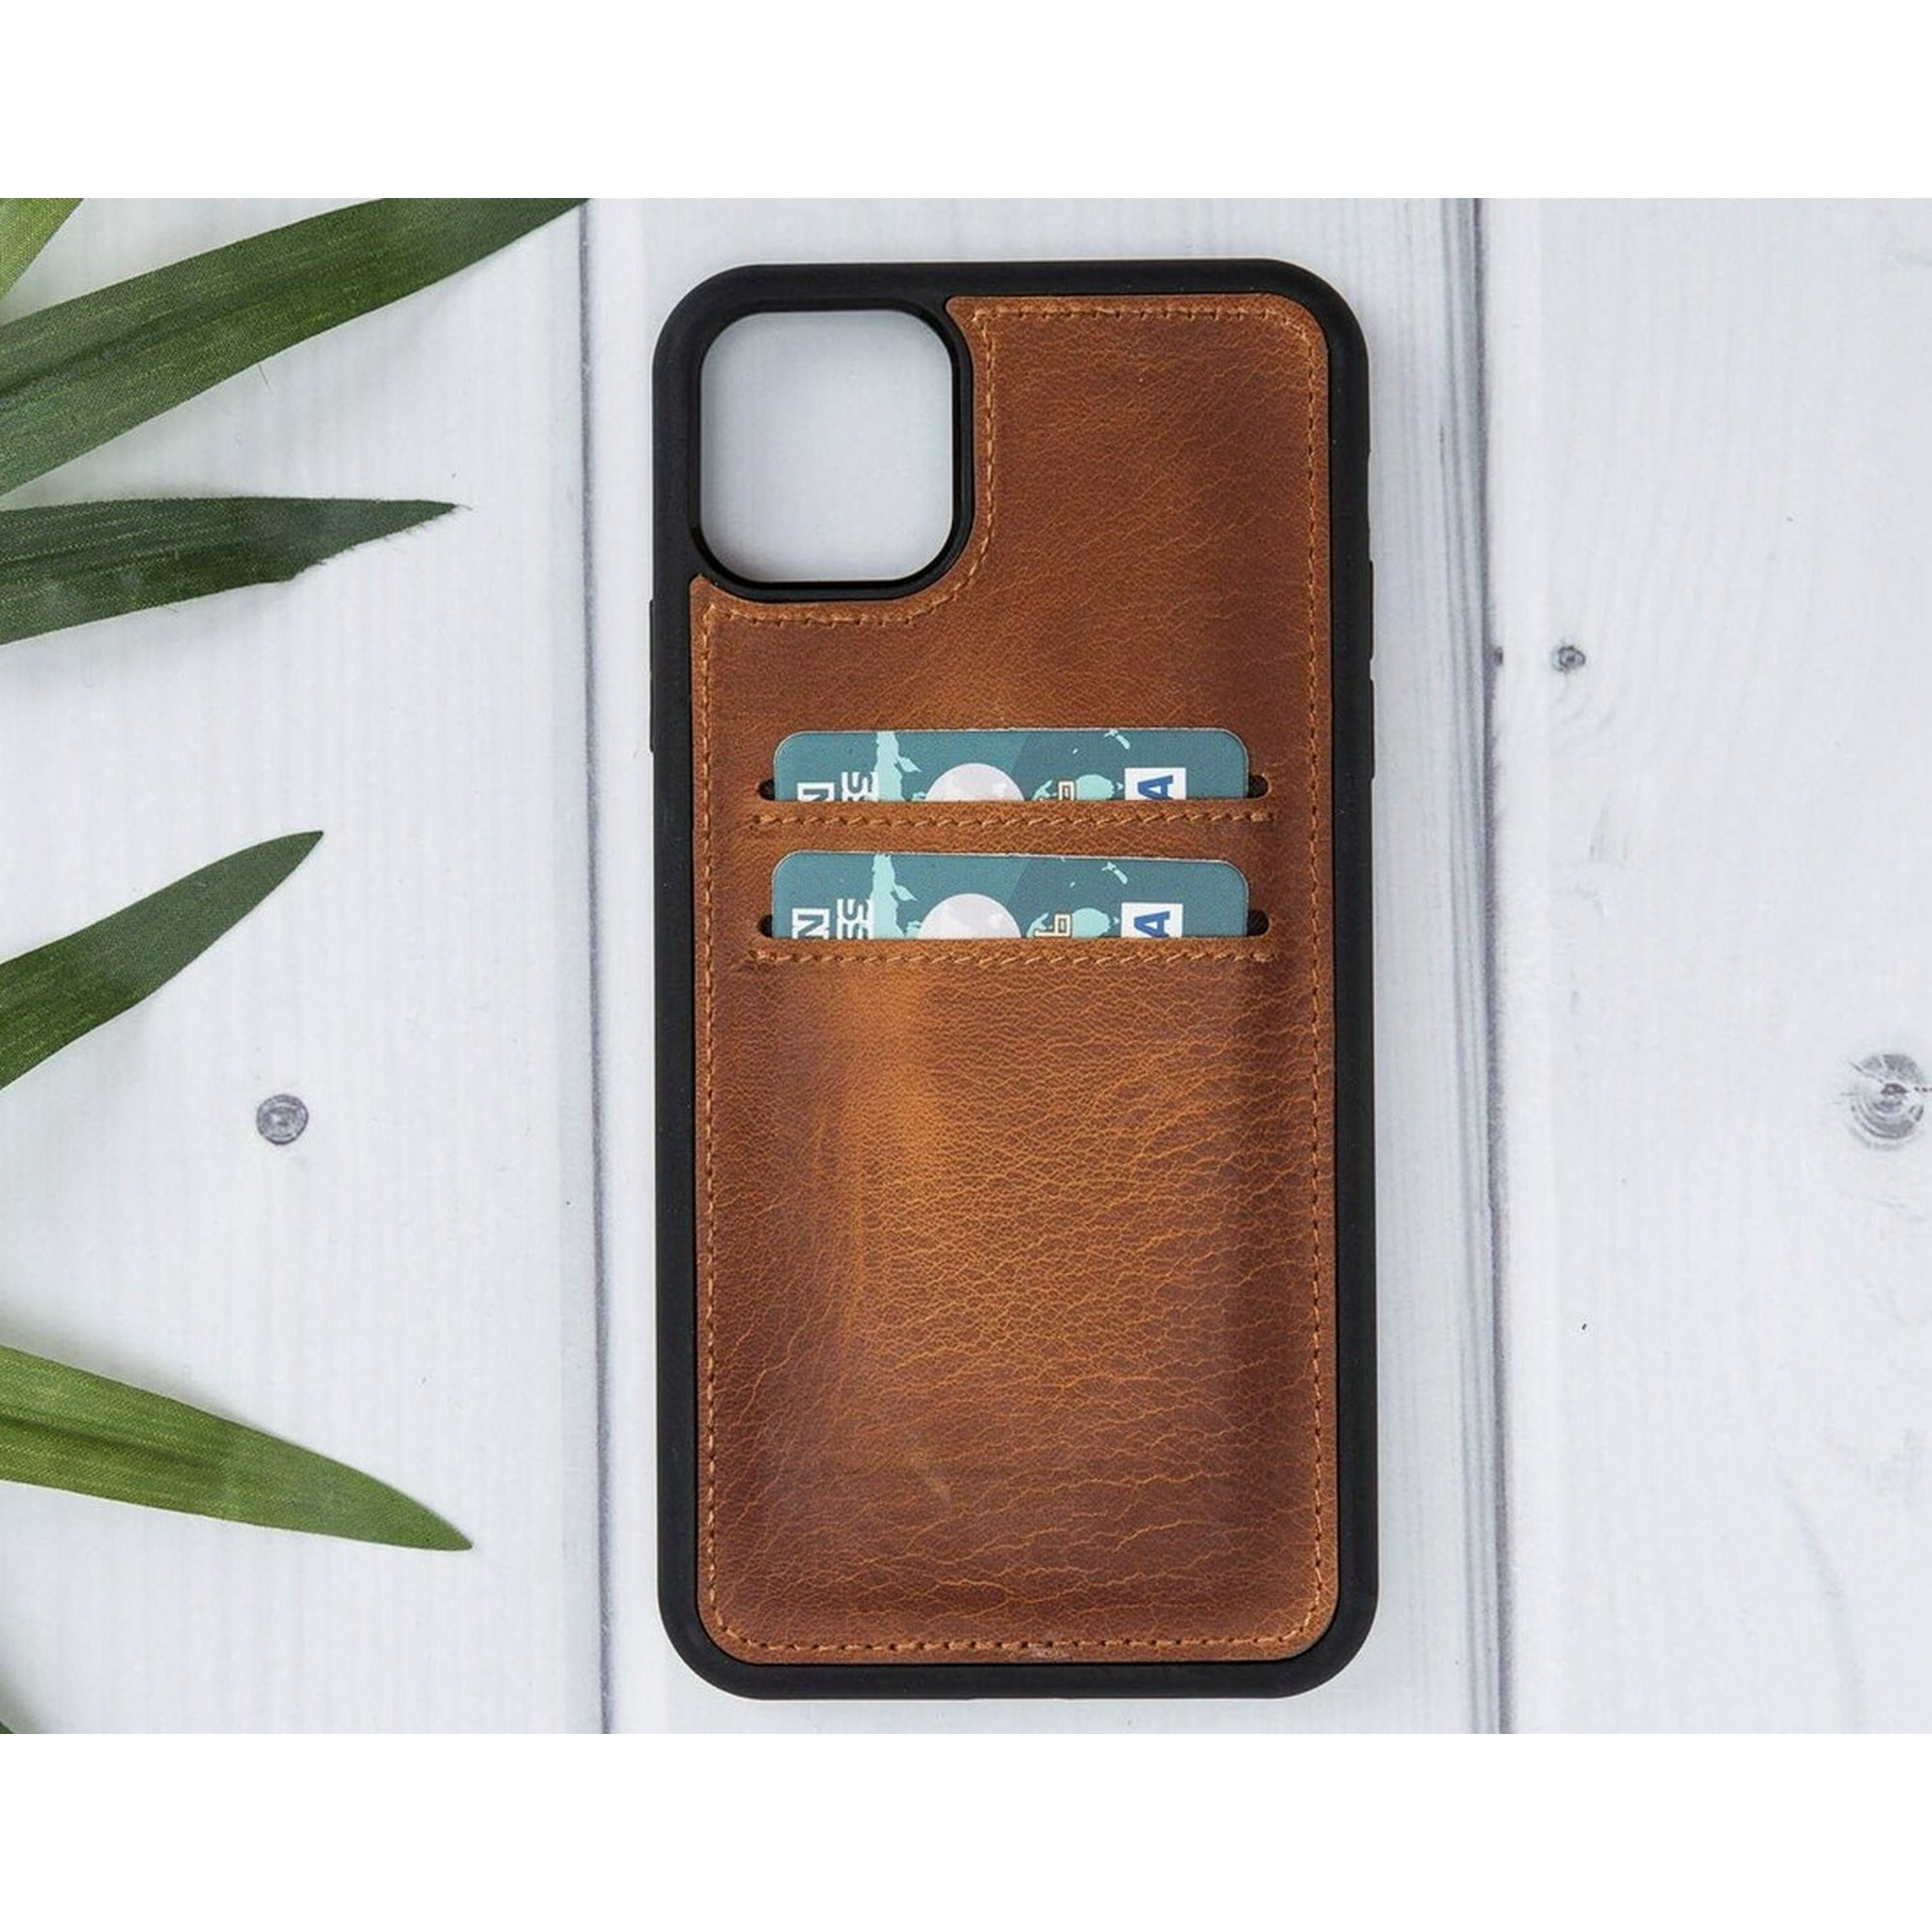 Designer phone case to personalize